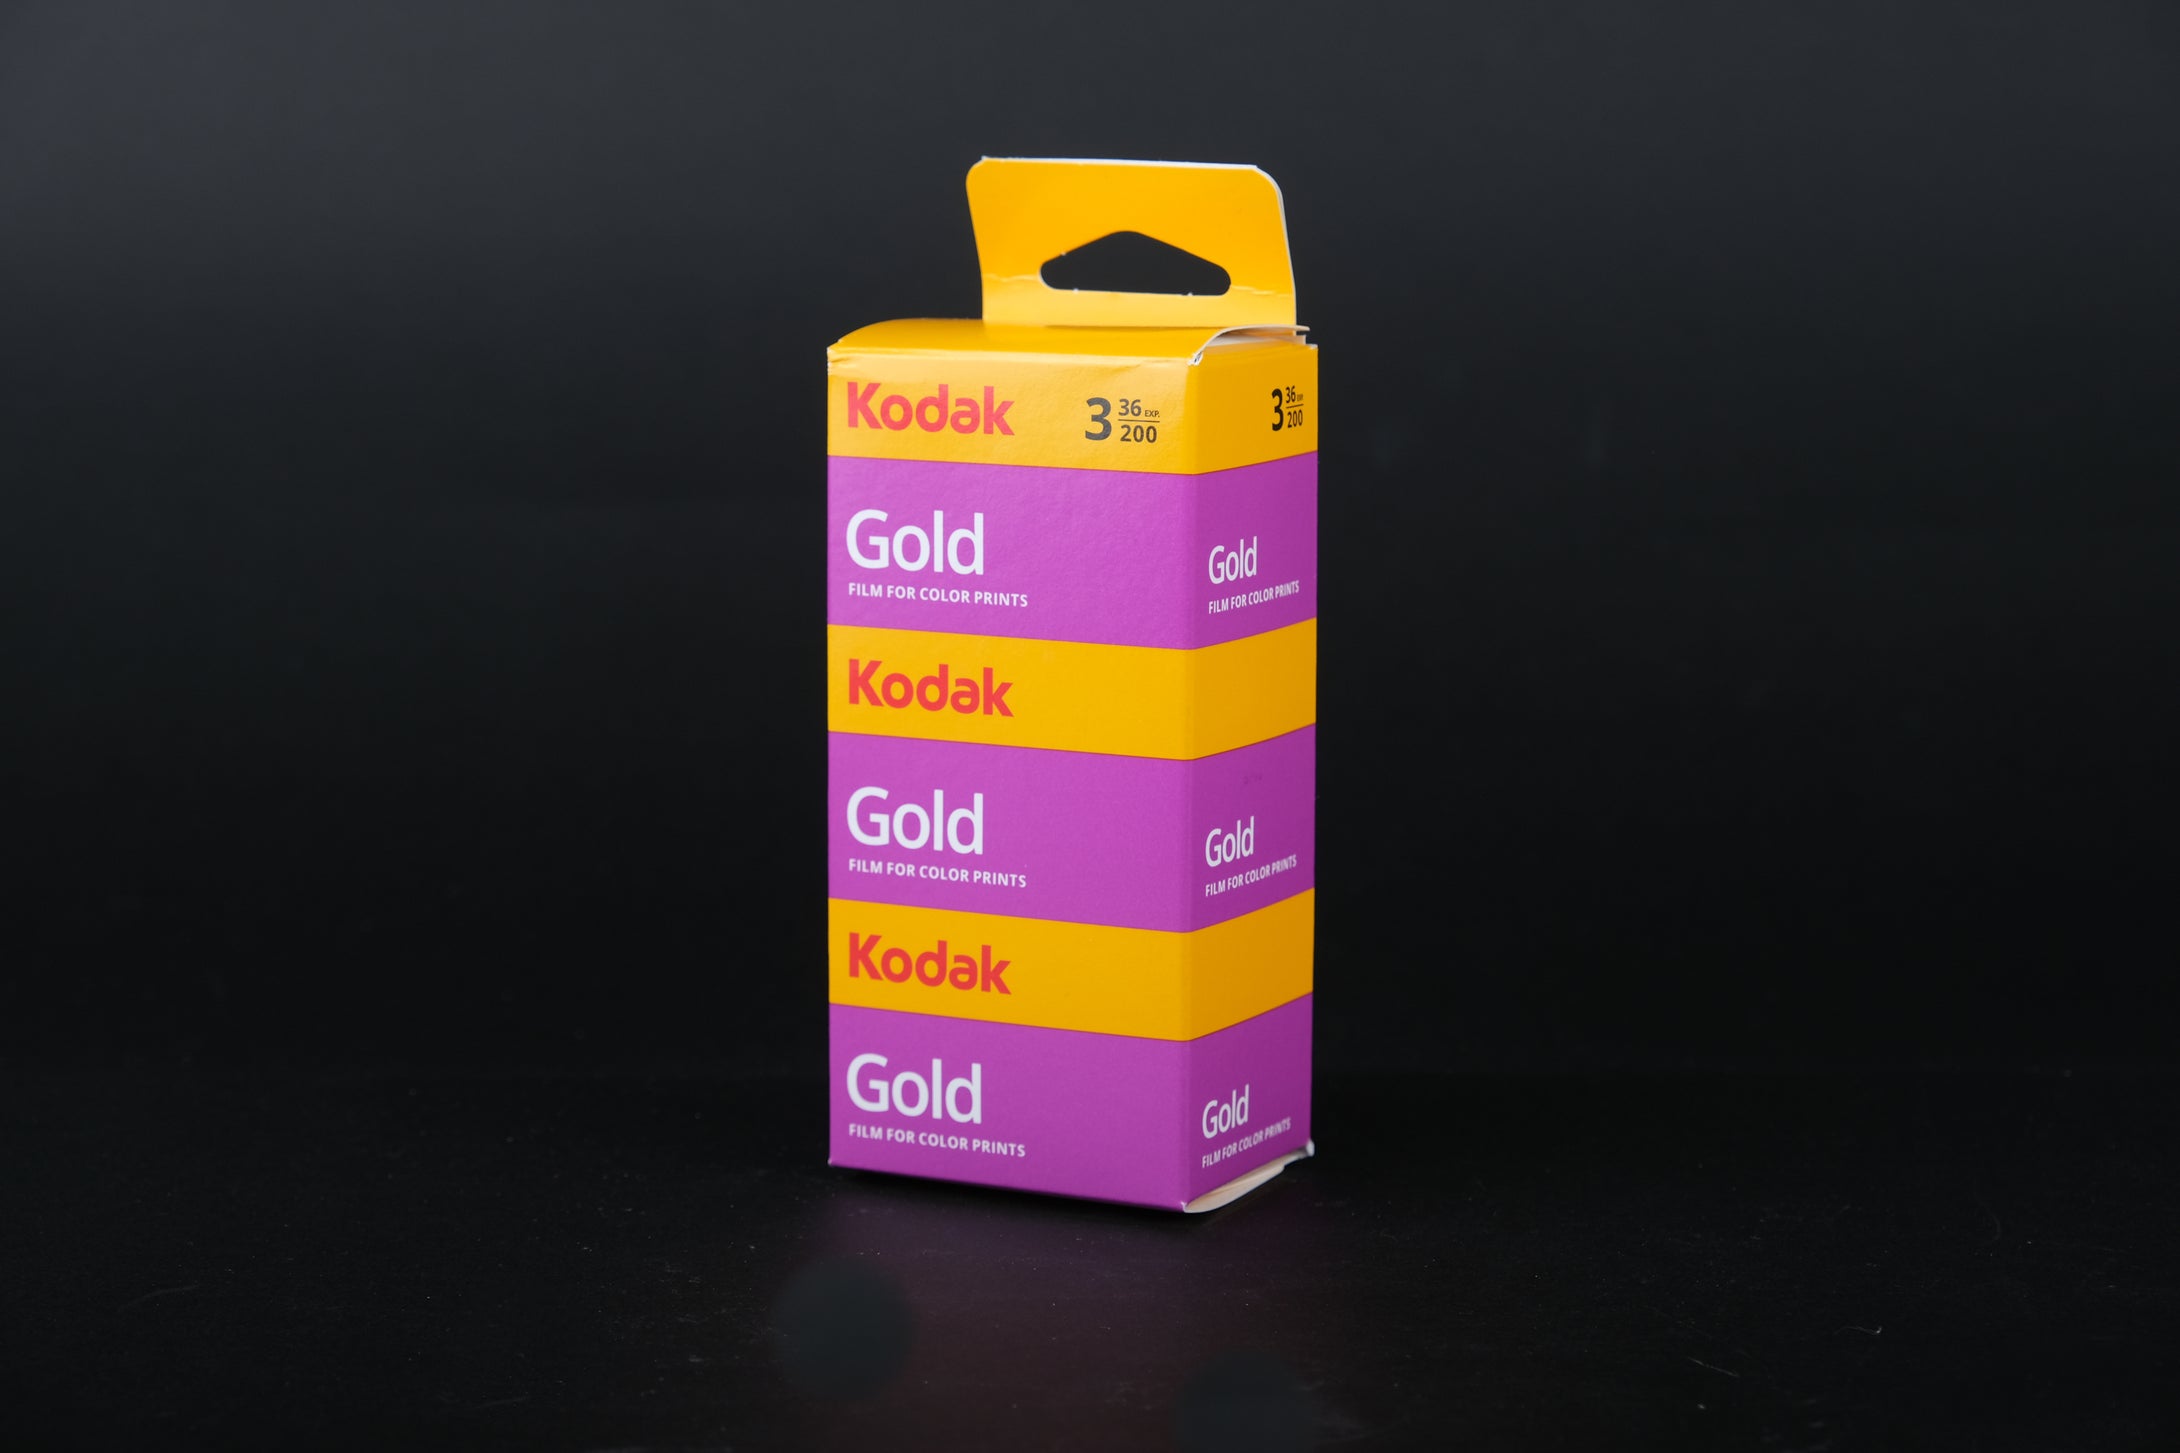 Kodak Gold 200 36exp 35mm Colour Negative Film